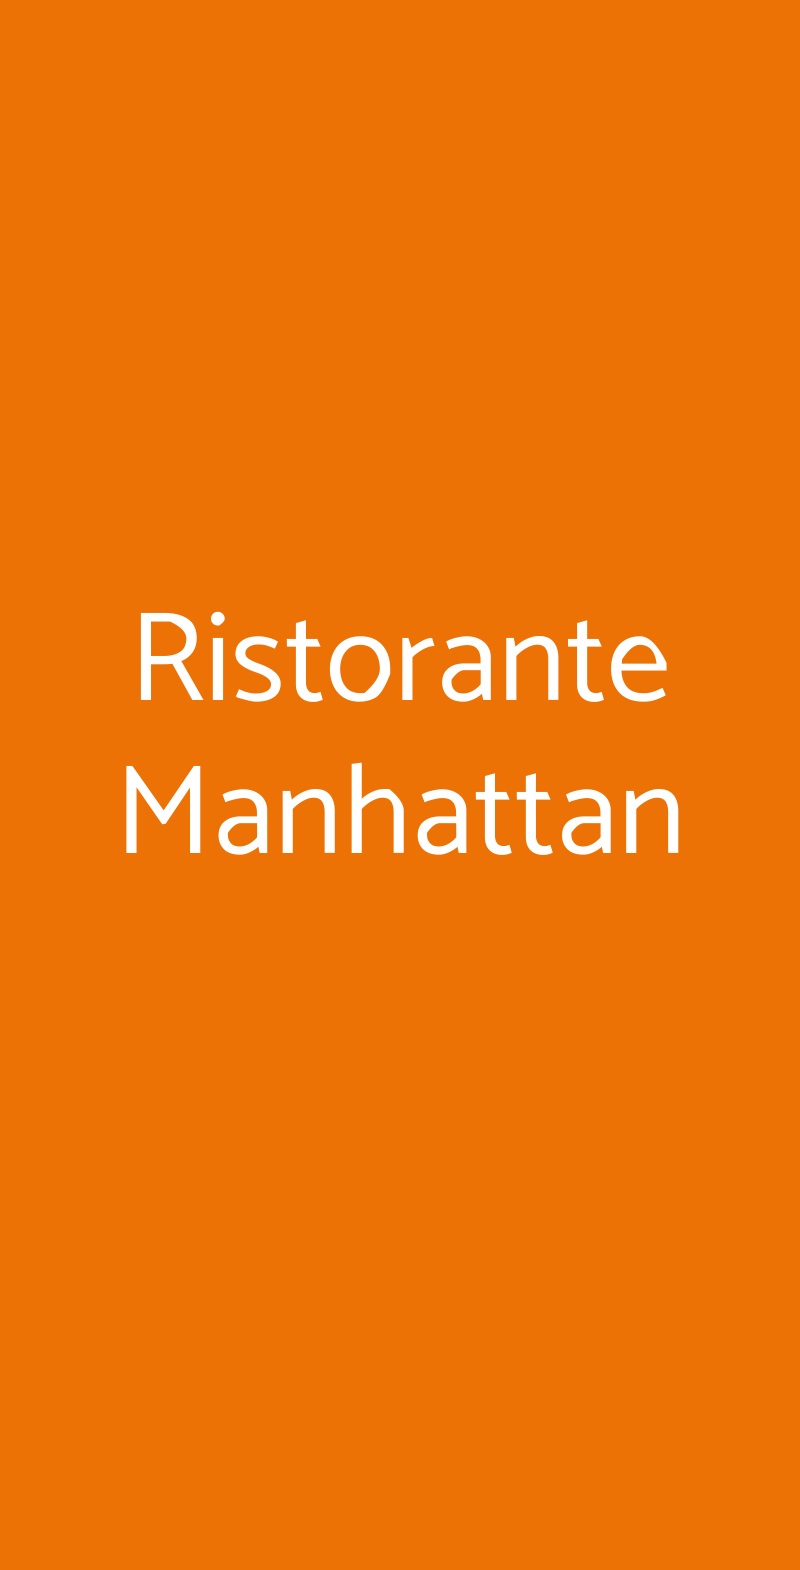 Ristorante Manhattan Milano menù 1 pagina